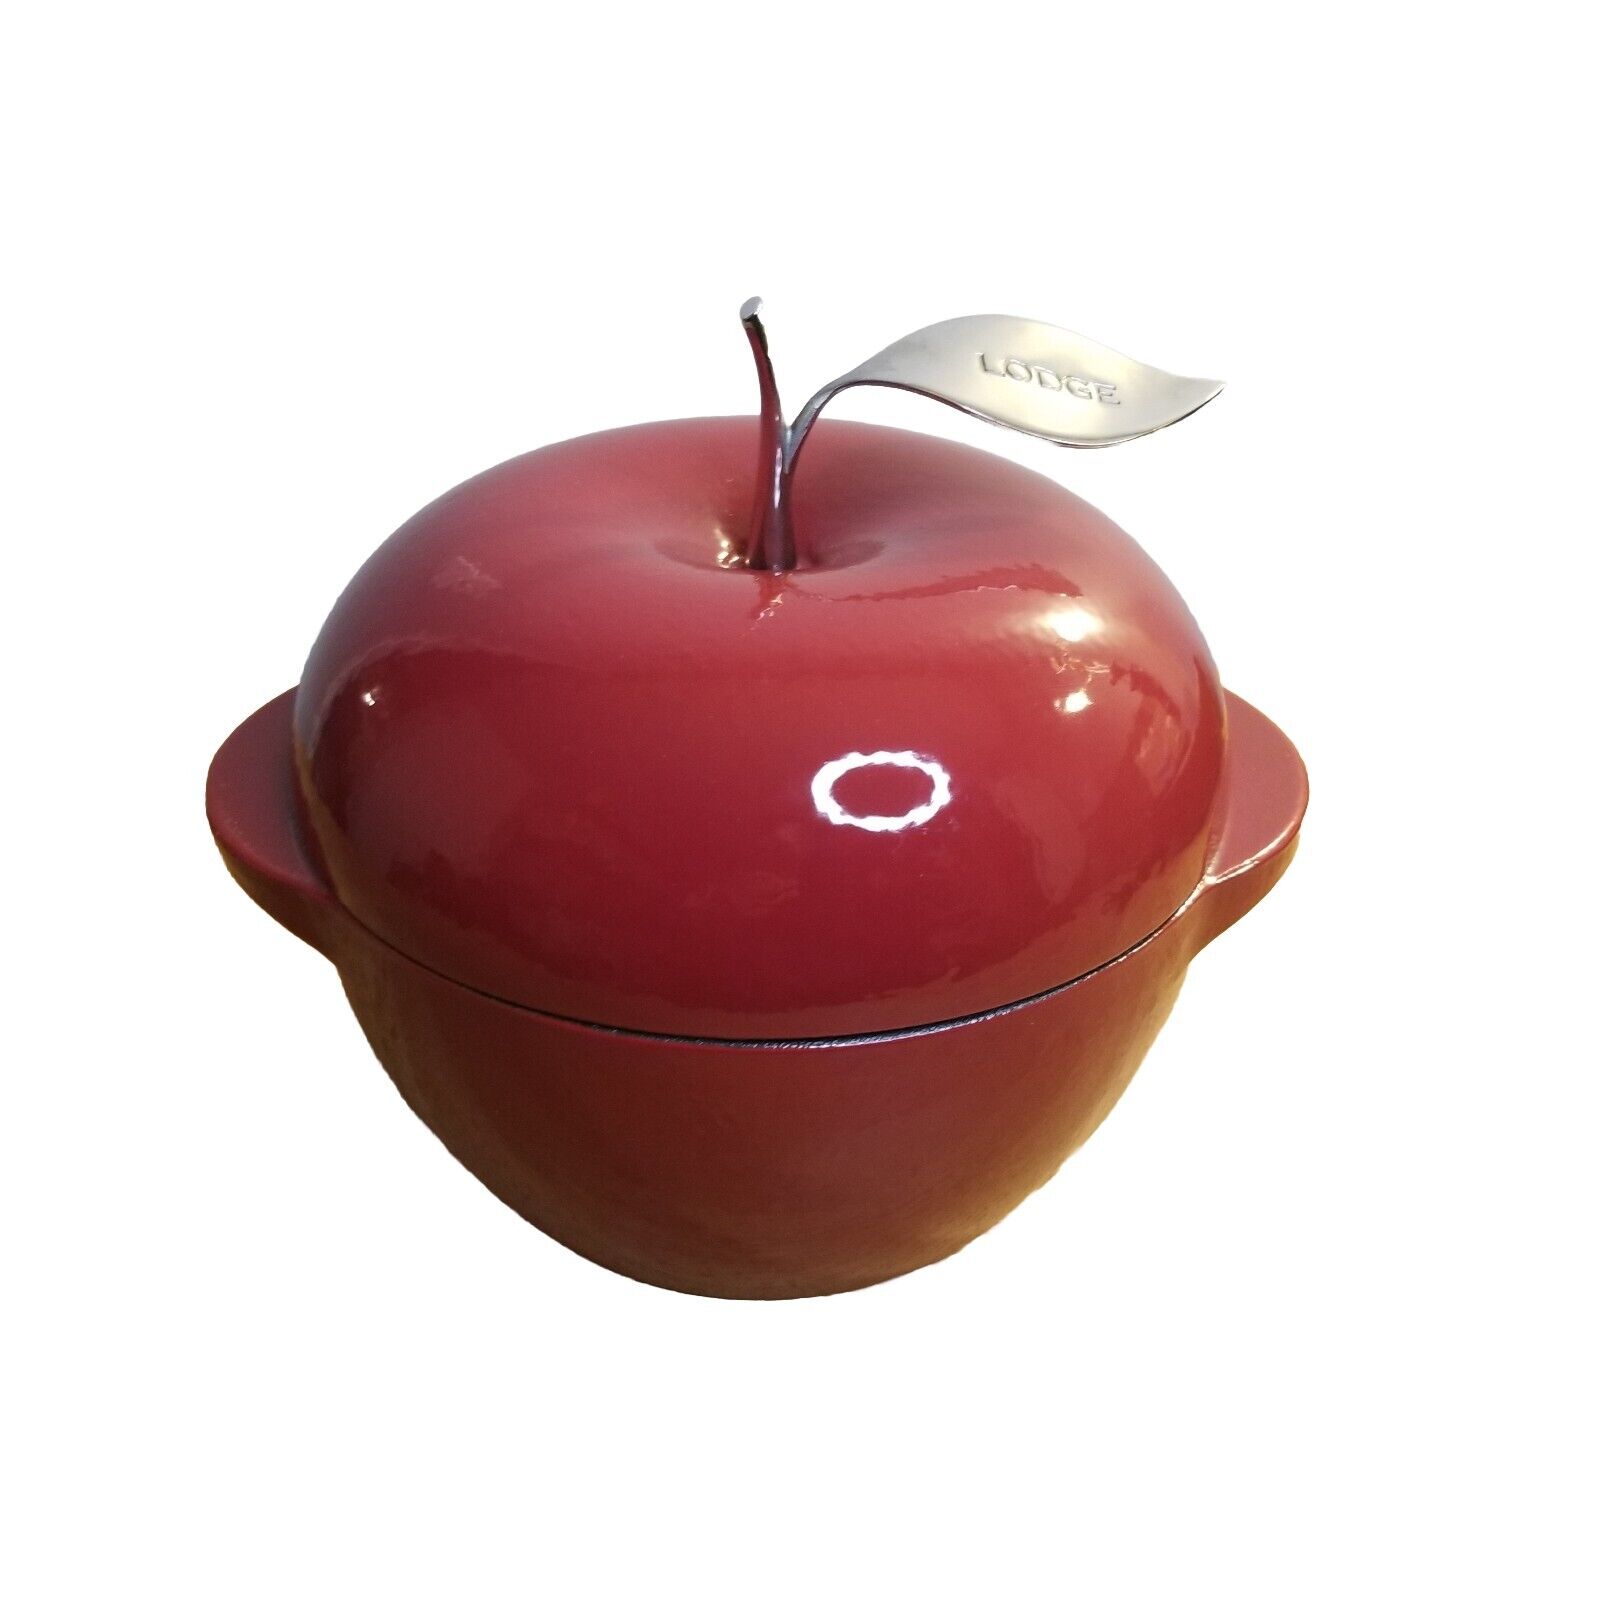 Lodge Red Apple Dutch Oven 3.5 Qt Enamel Cast Iron Casserole Baking Cooking Dish